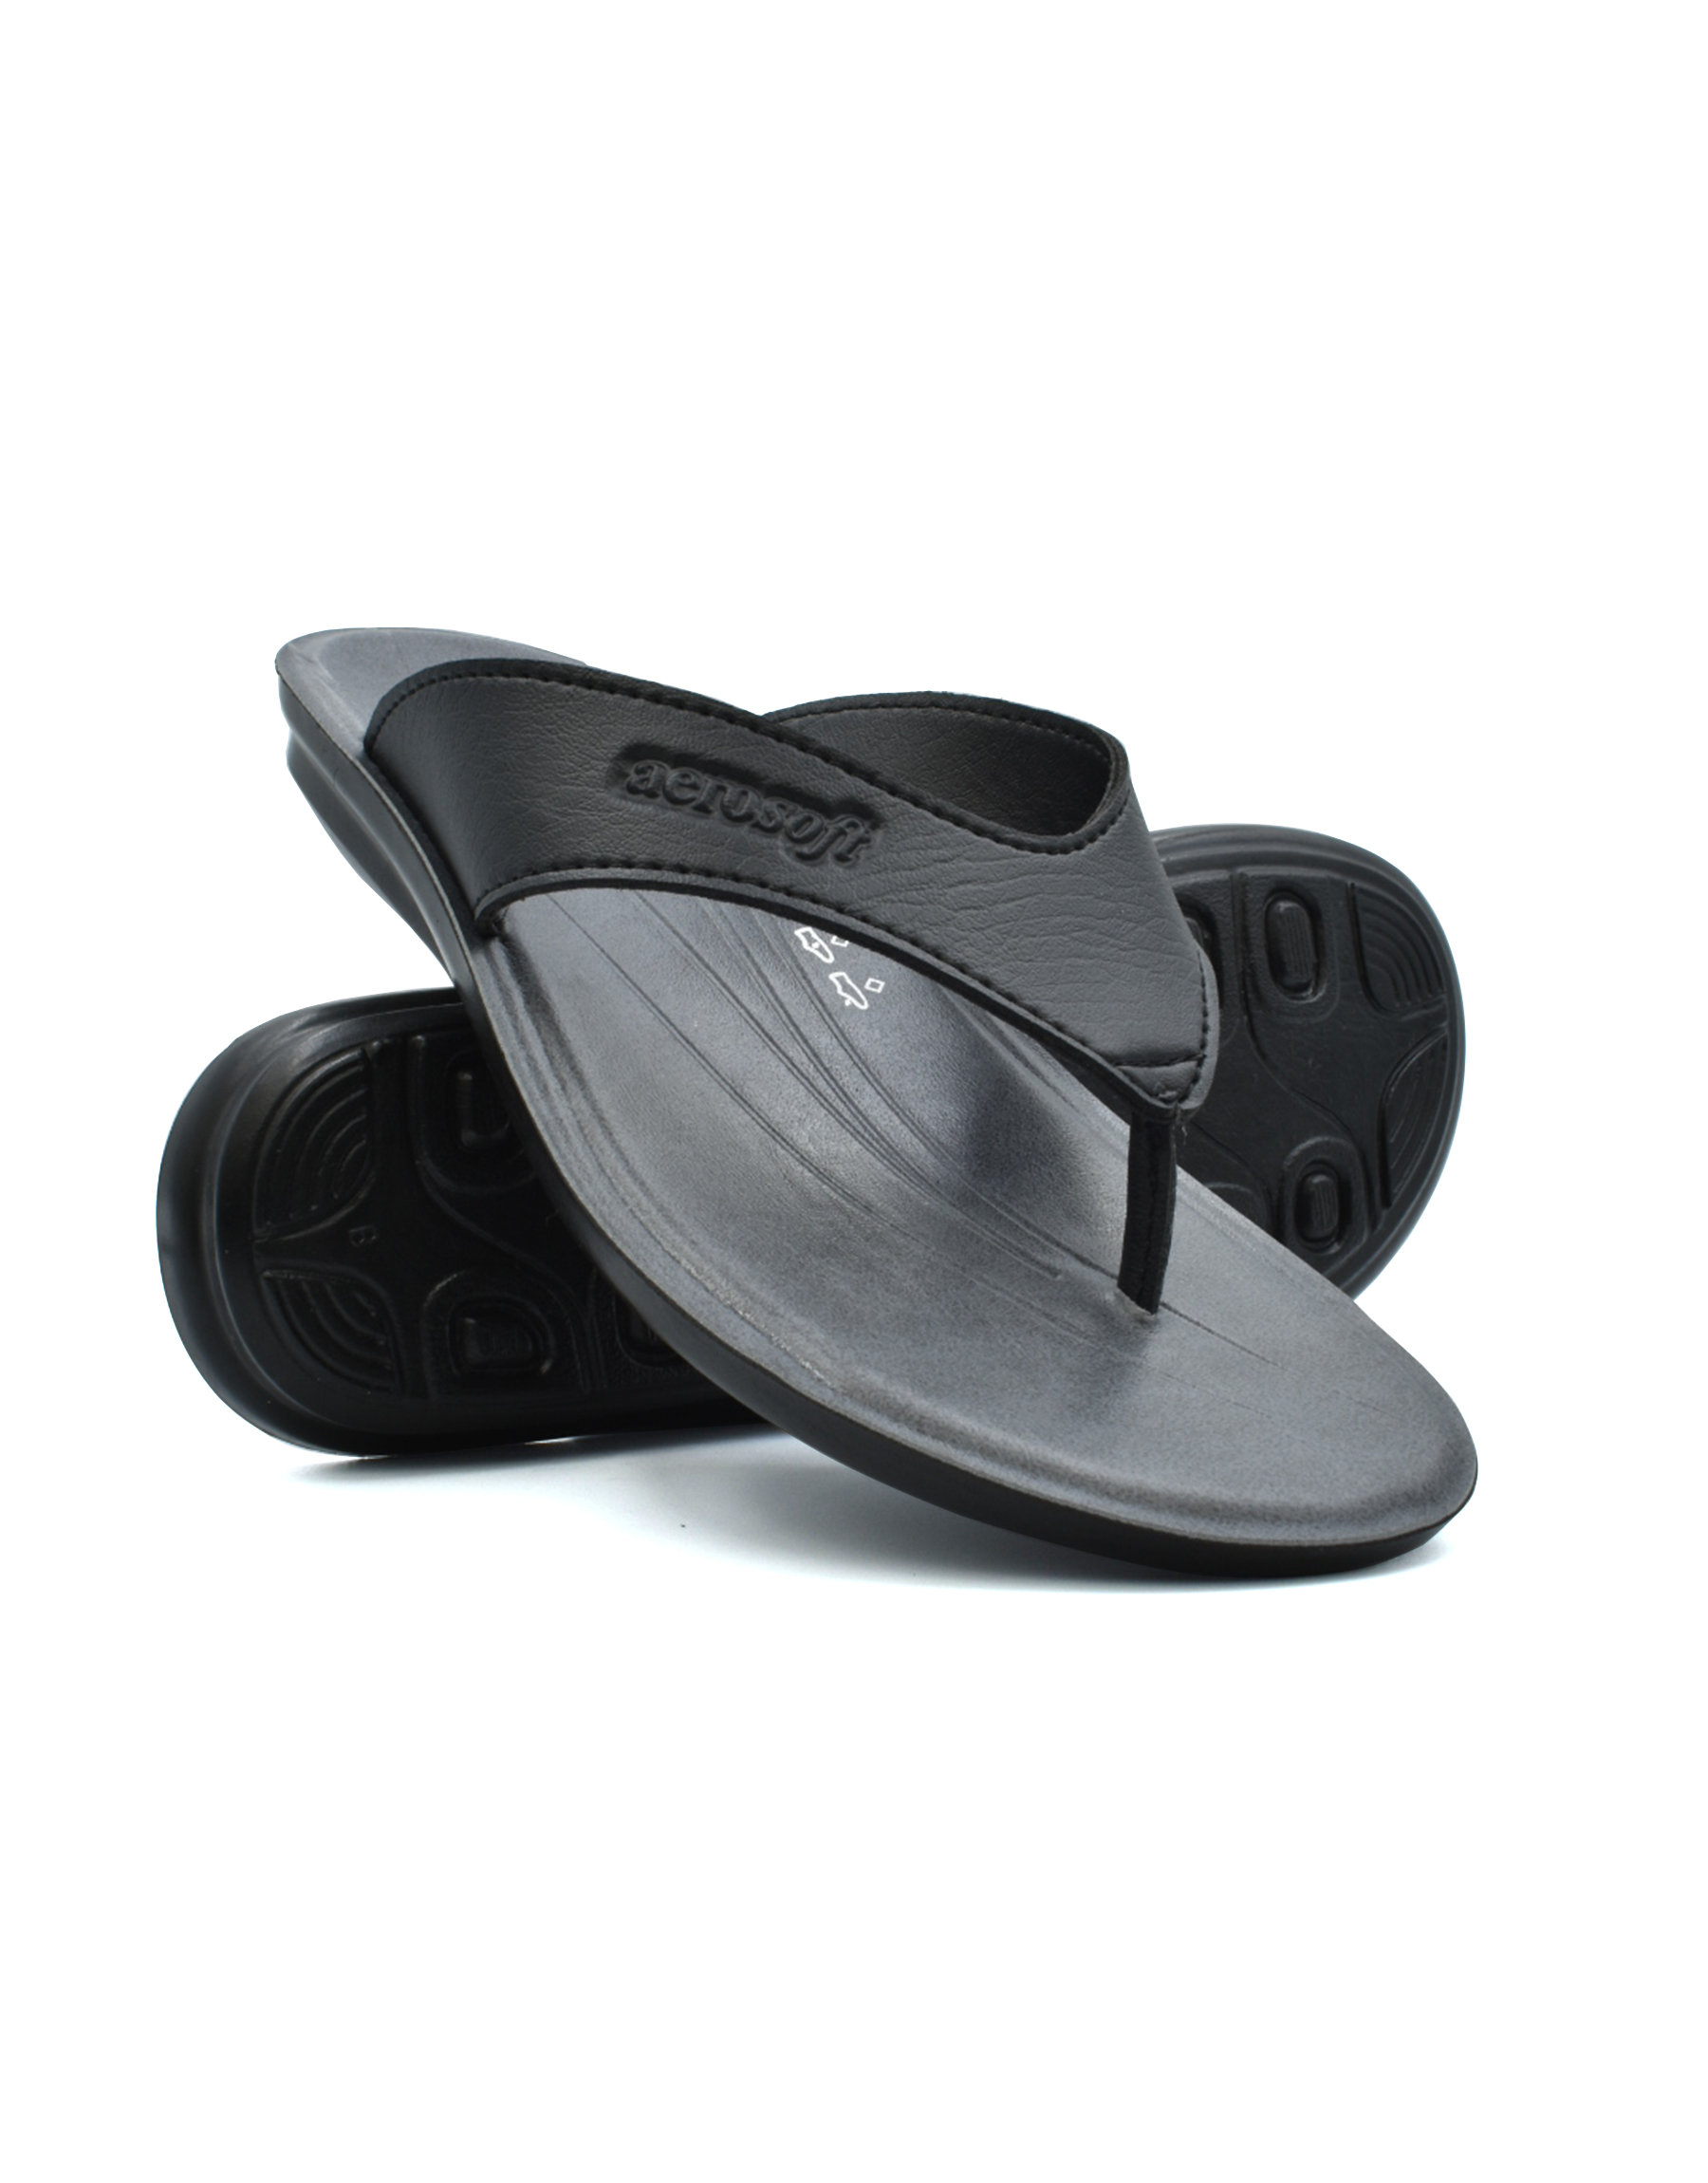 Aerosoft B0114 Pepe Boys Original Sandals, Black - Size 1 - Walmart.com